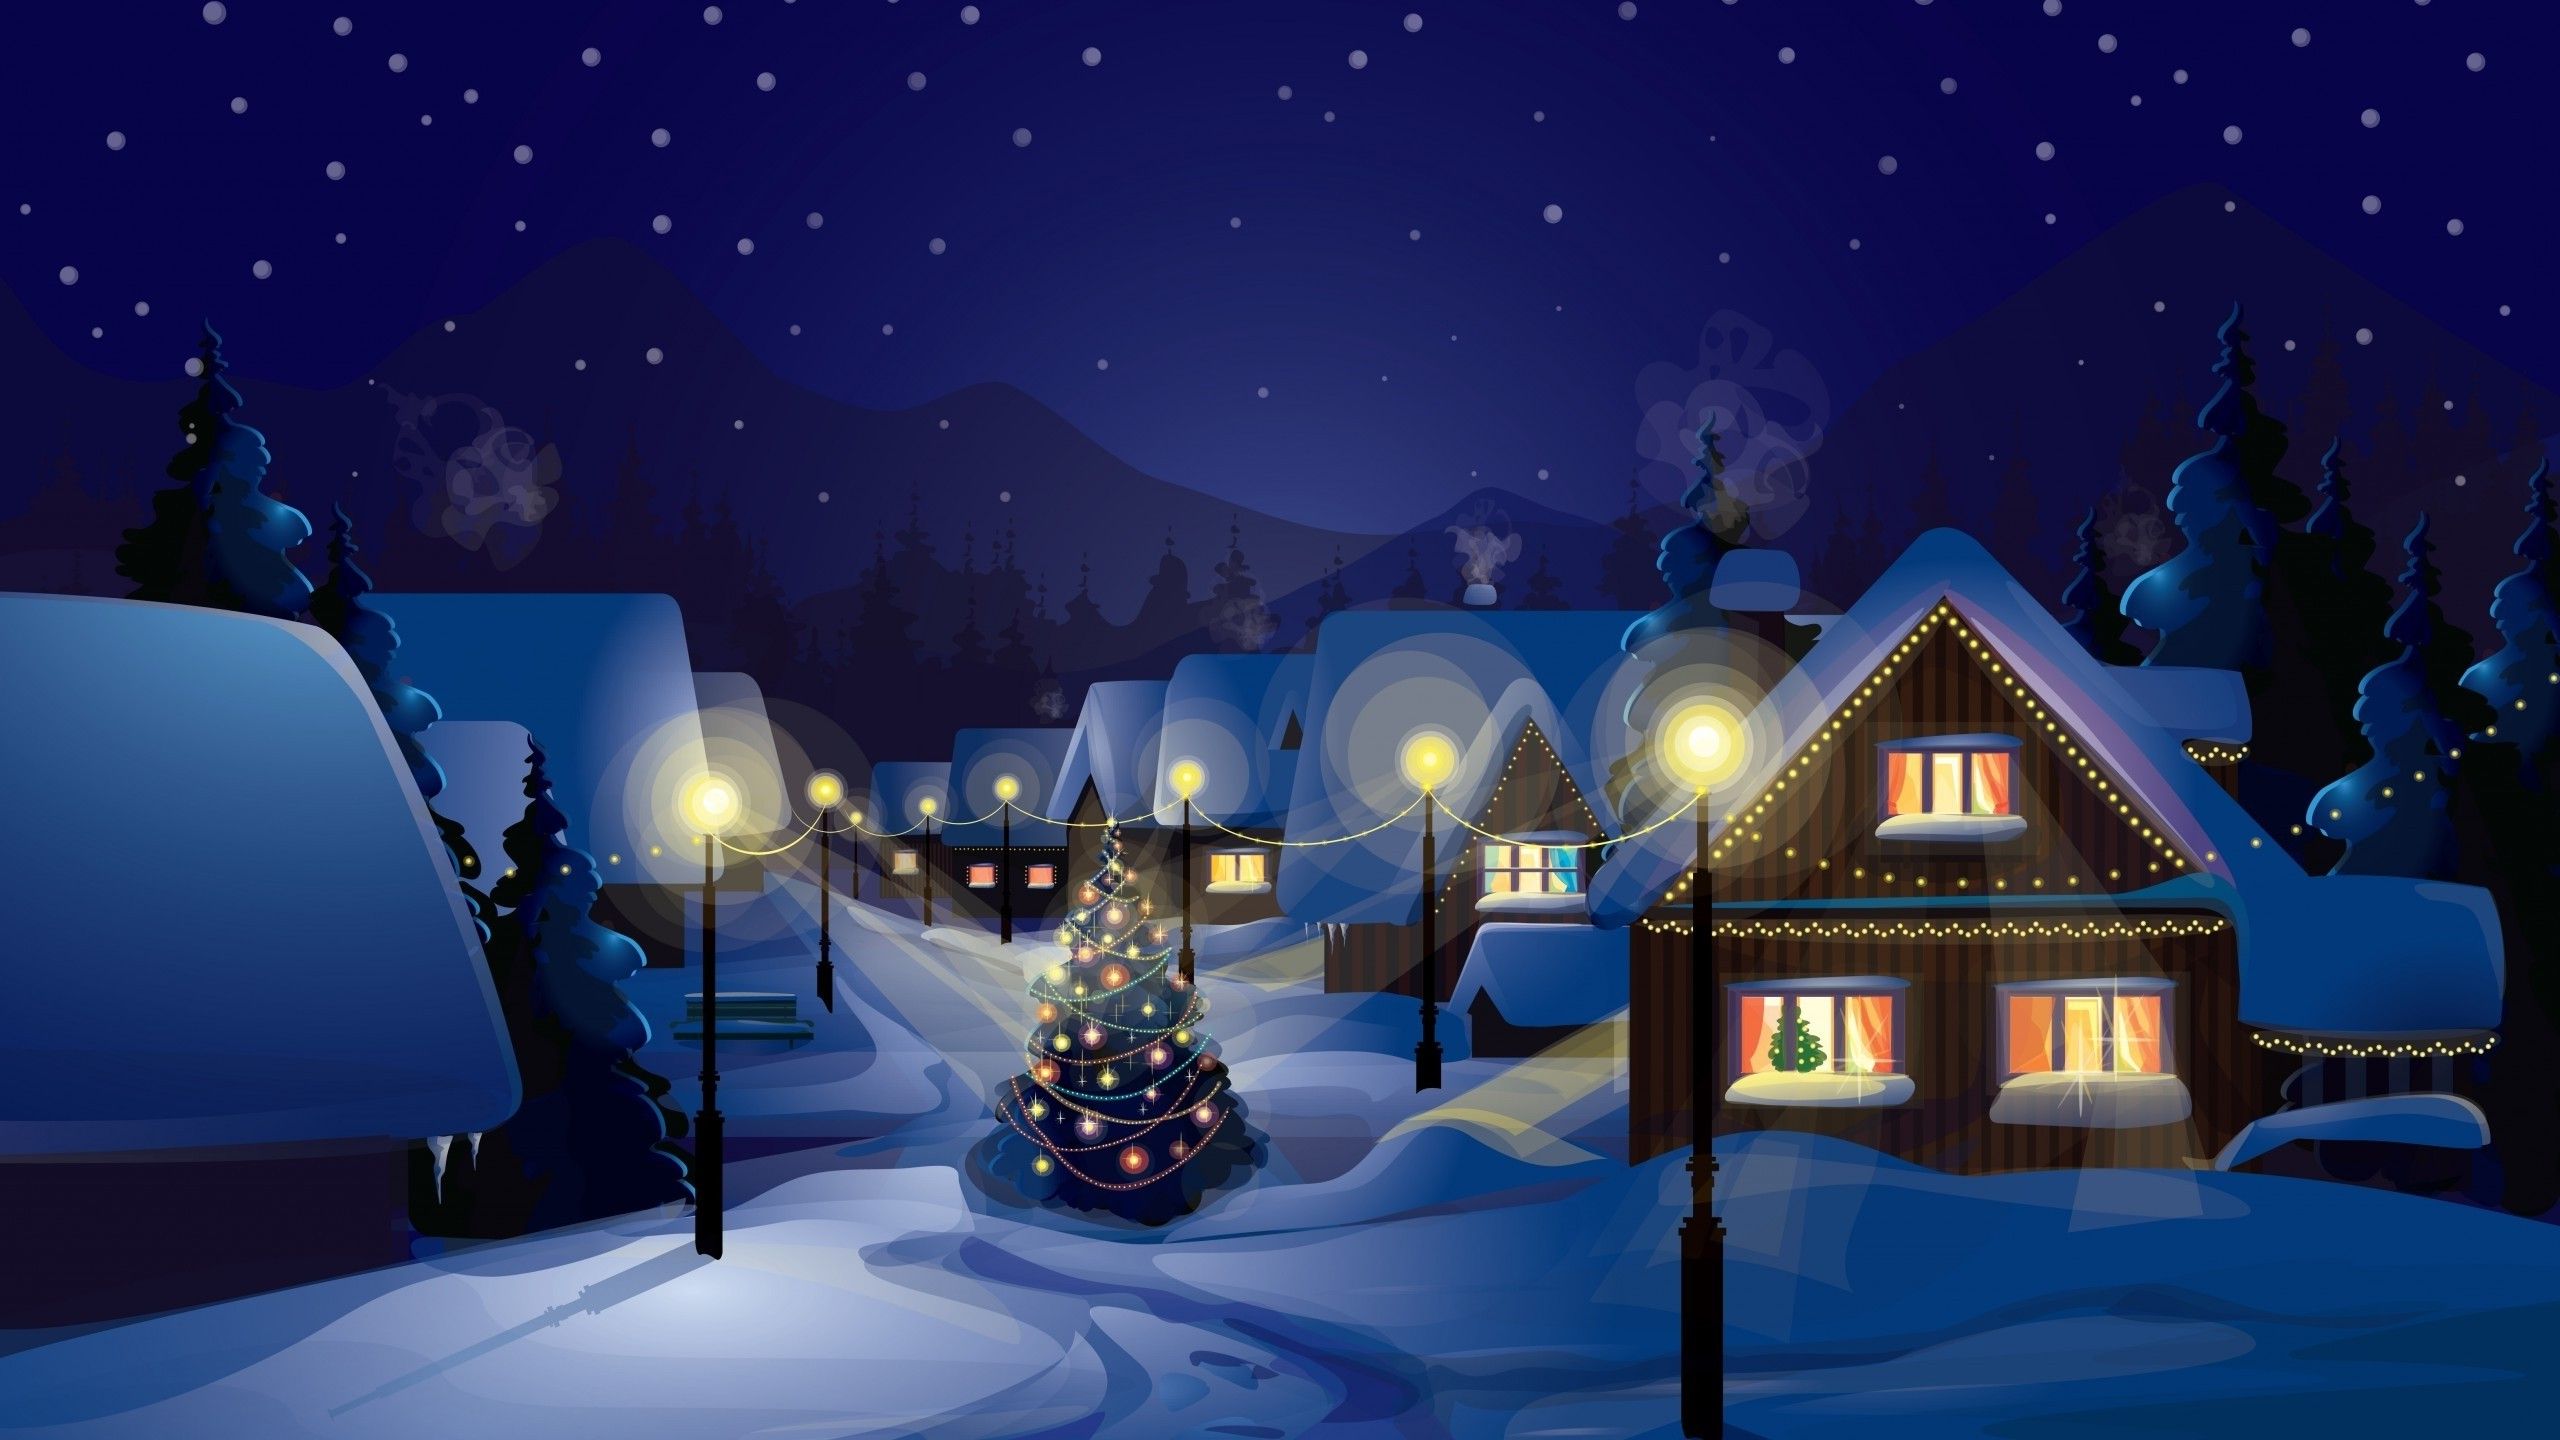 Winter Christmas Village Background